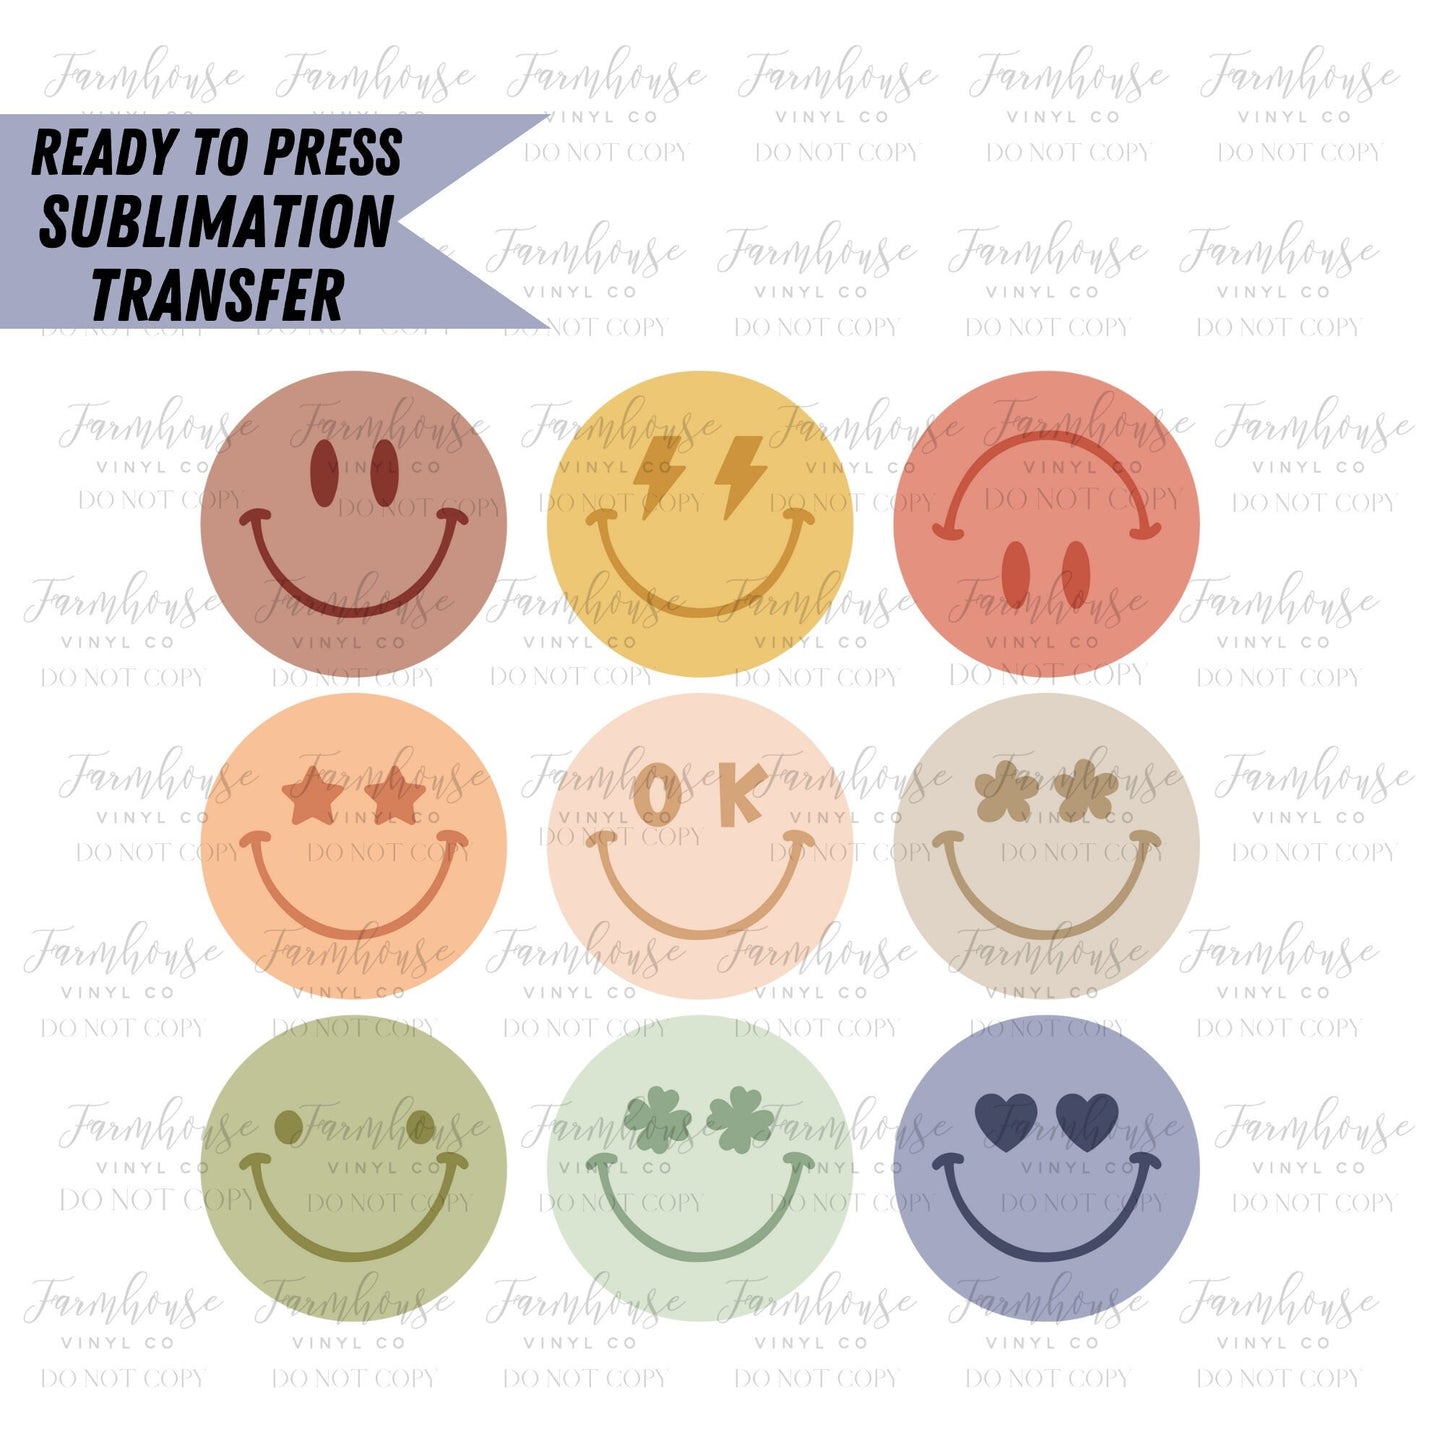 Smiling Face Retro, Ready to Press Sublimation Transfer, Sublimation Transfers, Heat Transfer, Ready to Press, Happy Retro Design - Farmhouse Vinyl Co